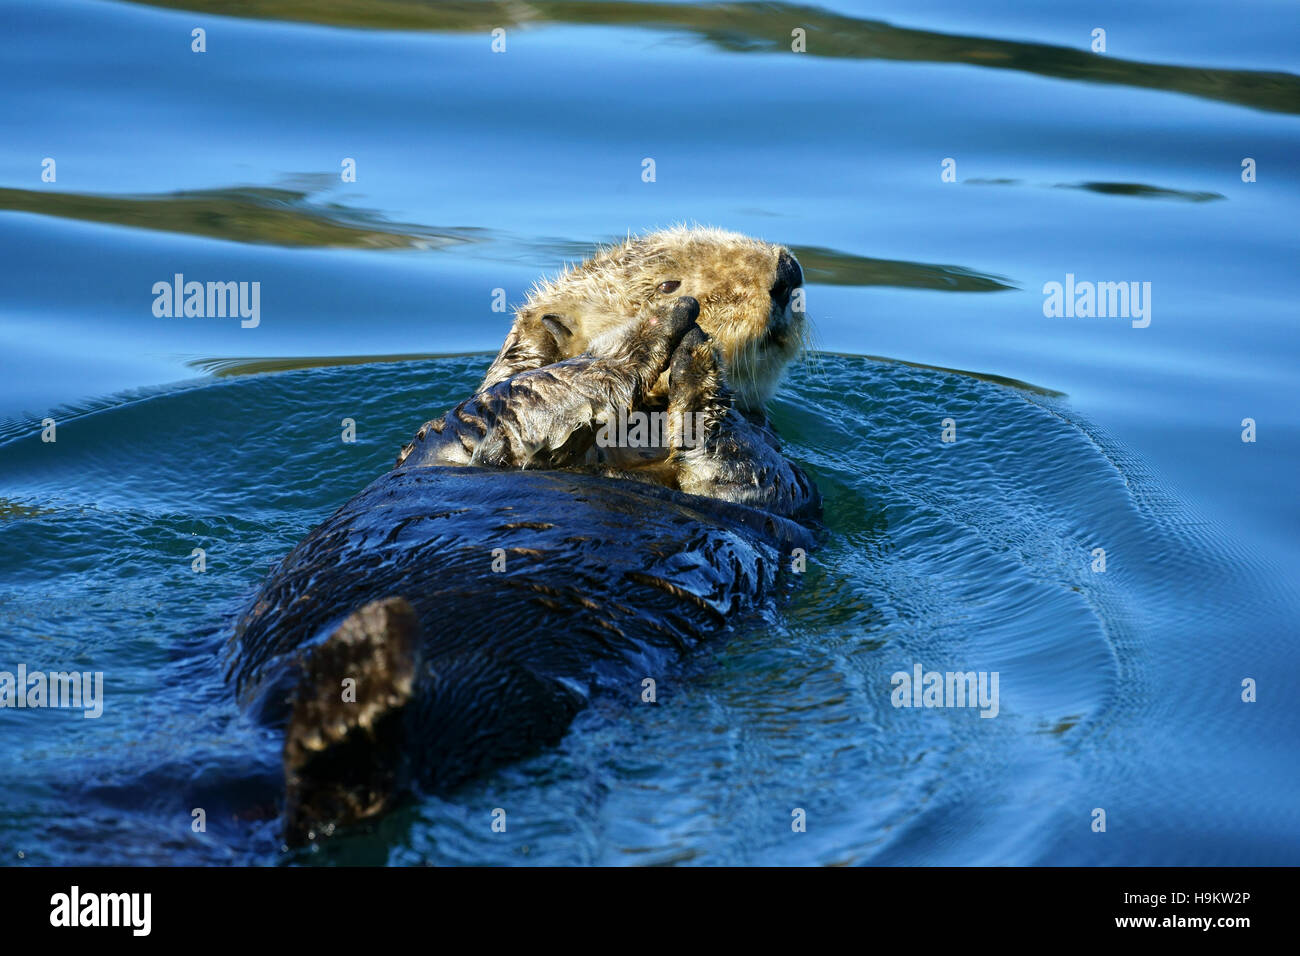 Kachemak bay animals hi-res stock photography and images - Alamy